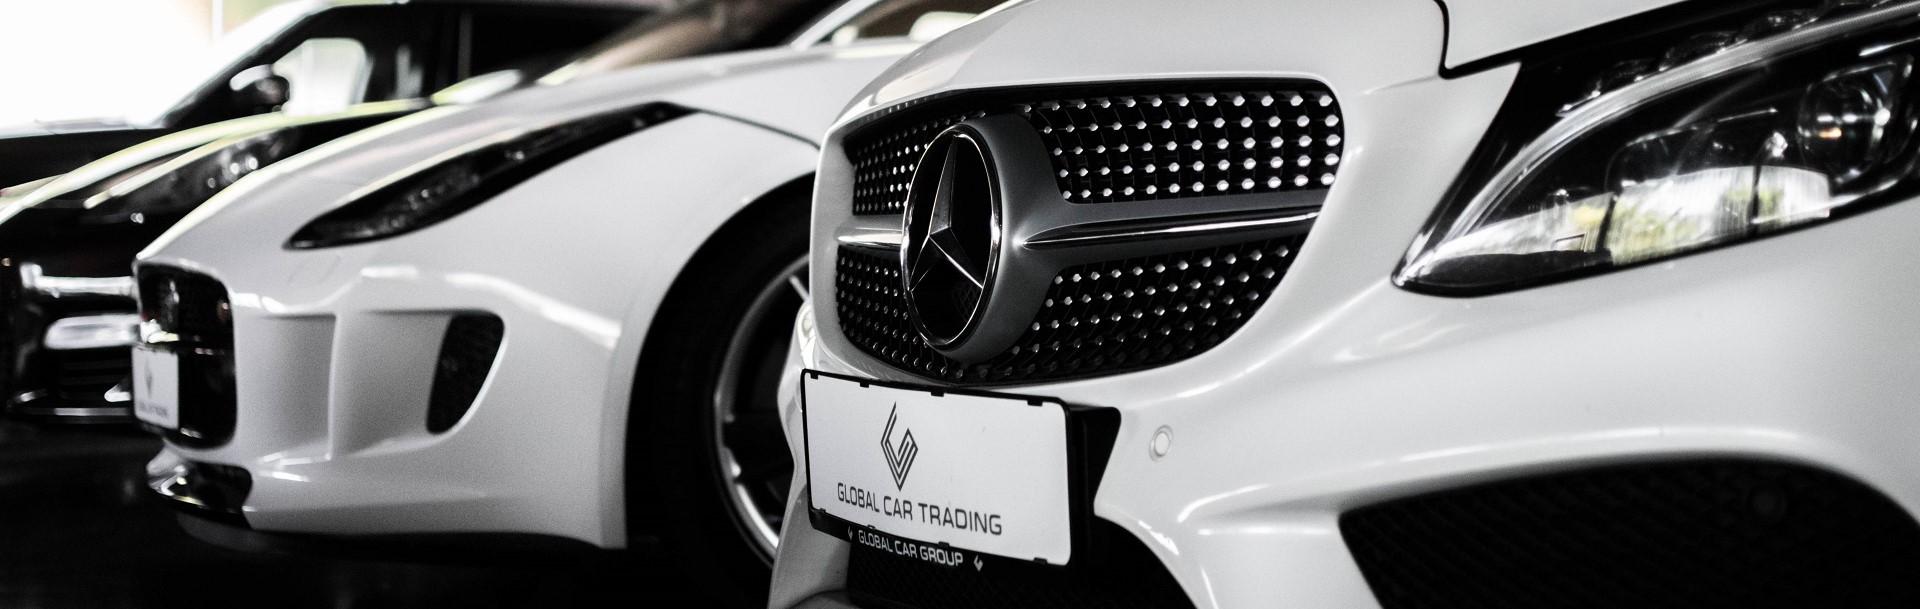 Mercedes leasing